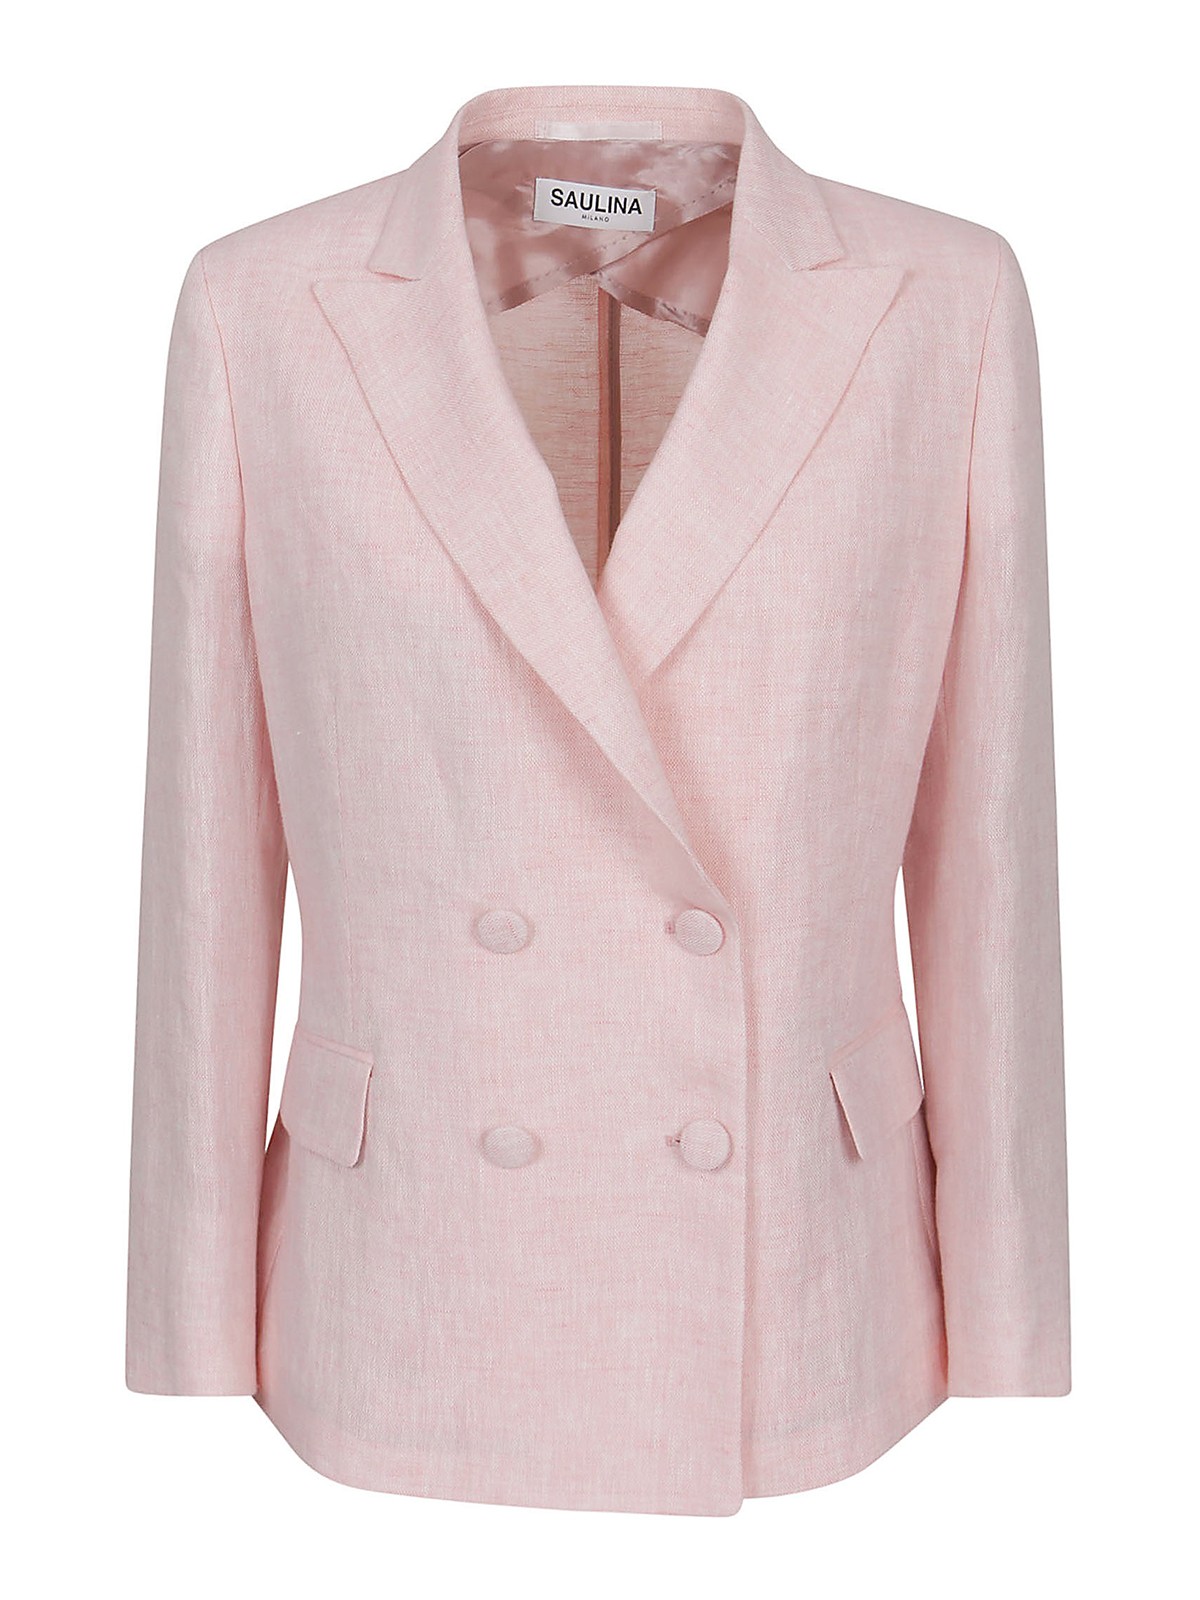 Saulina Antonella Jacket In Pink